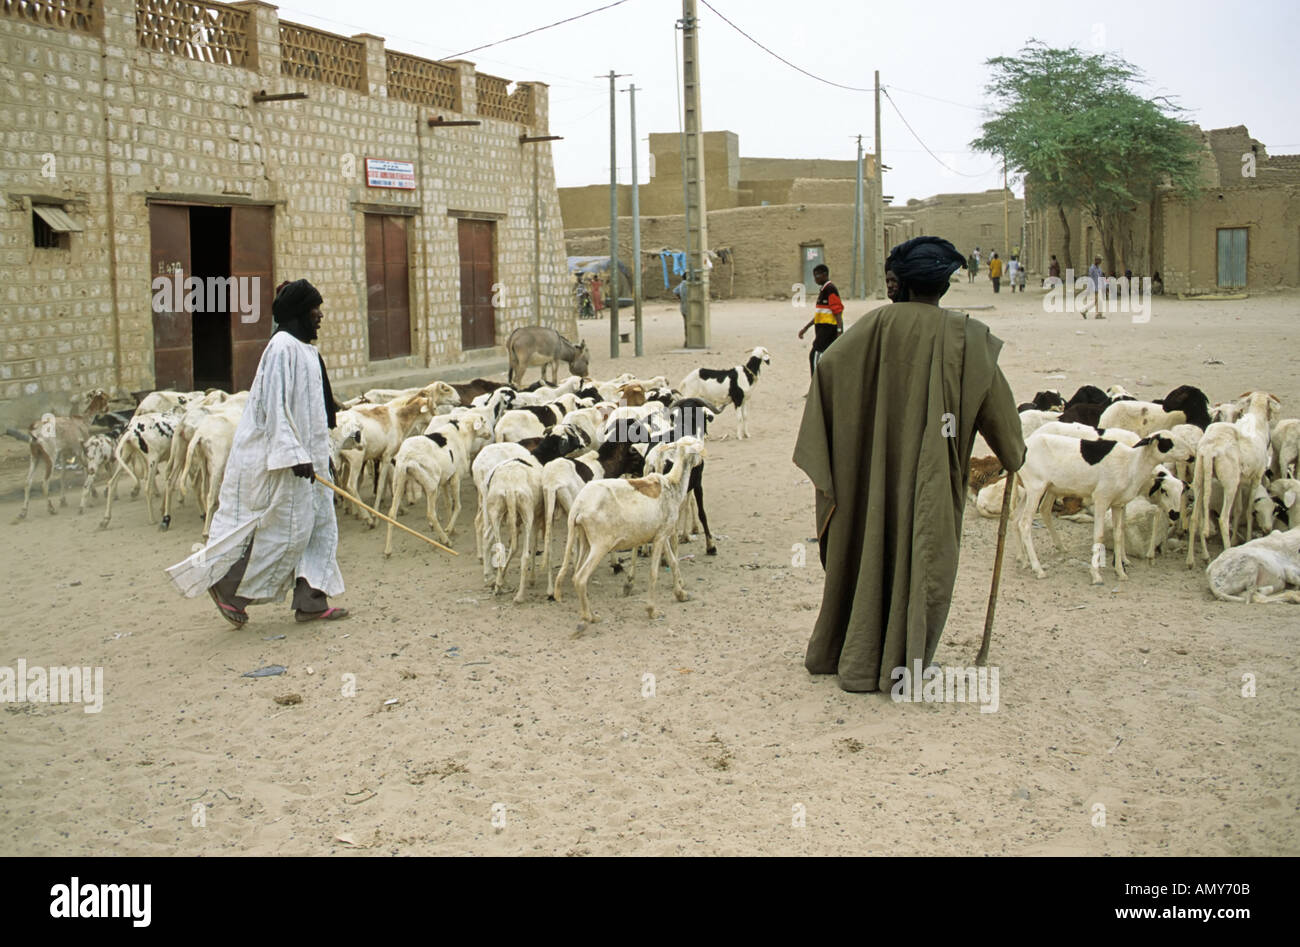 Radunare le pecore attraverso Timbuktu (Tombouctou), Mali Foto Stock